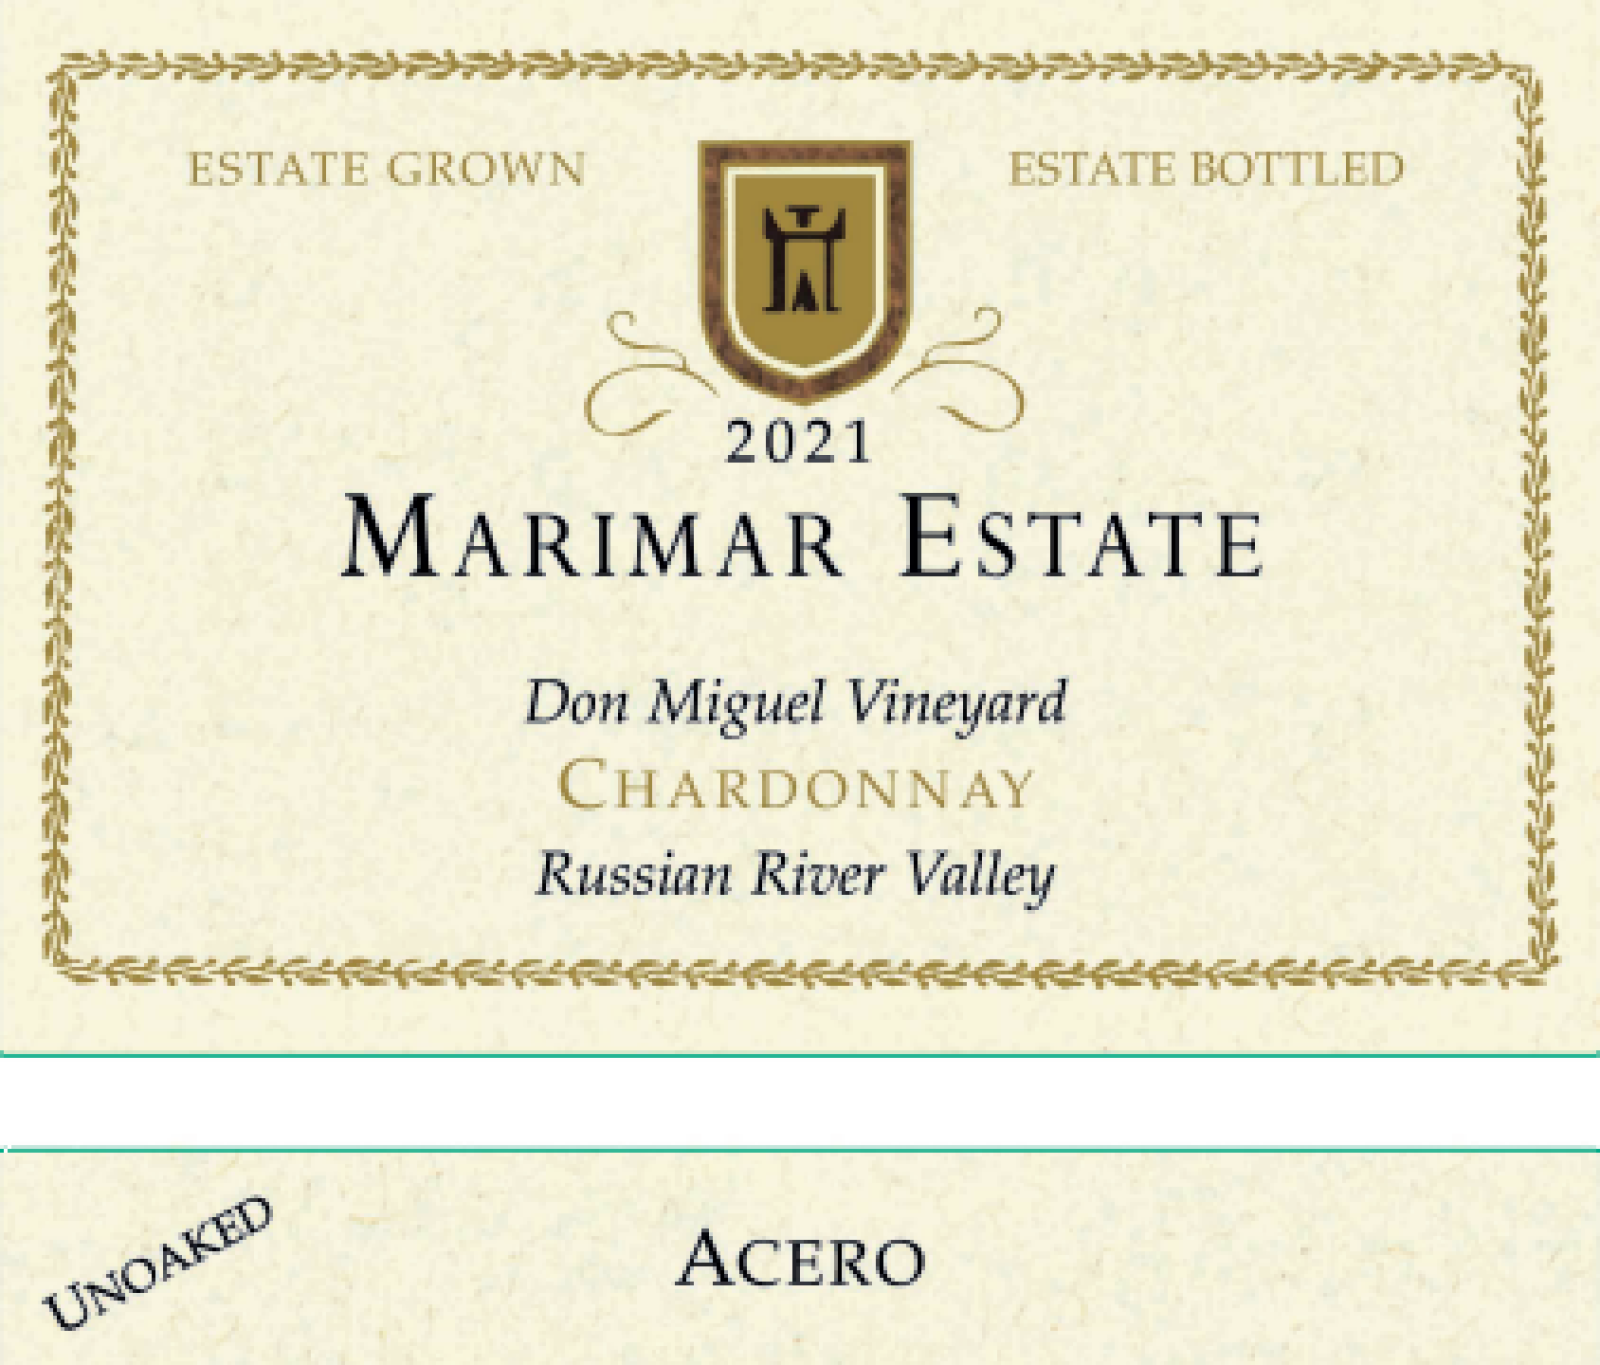 Marimar Unoaked Chardonnay Acero 2021